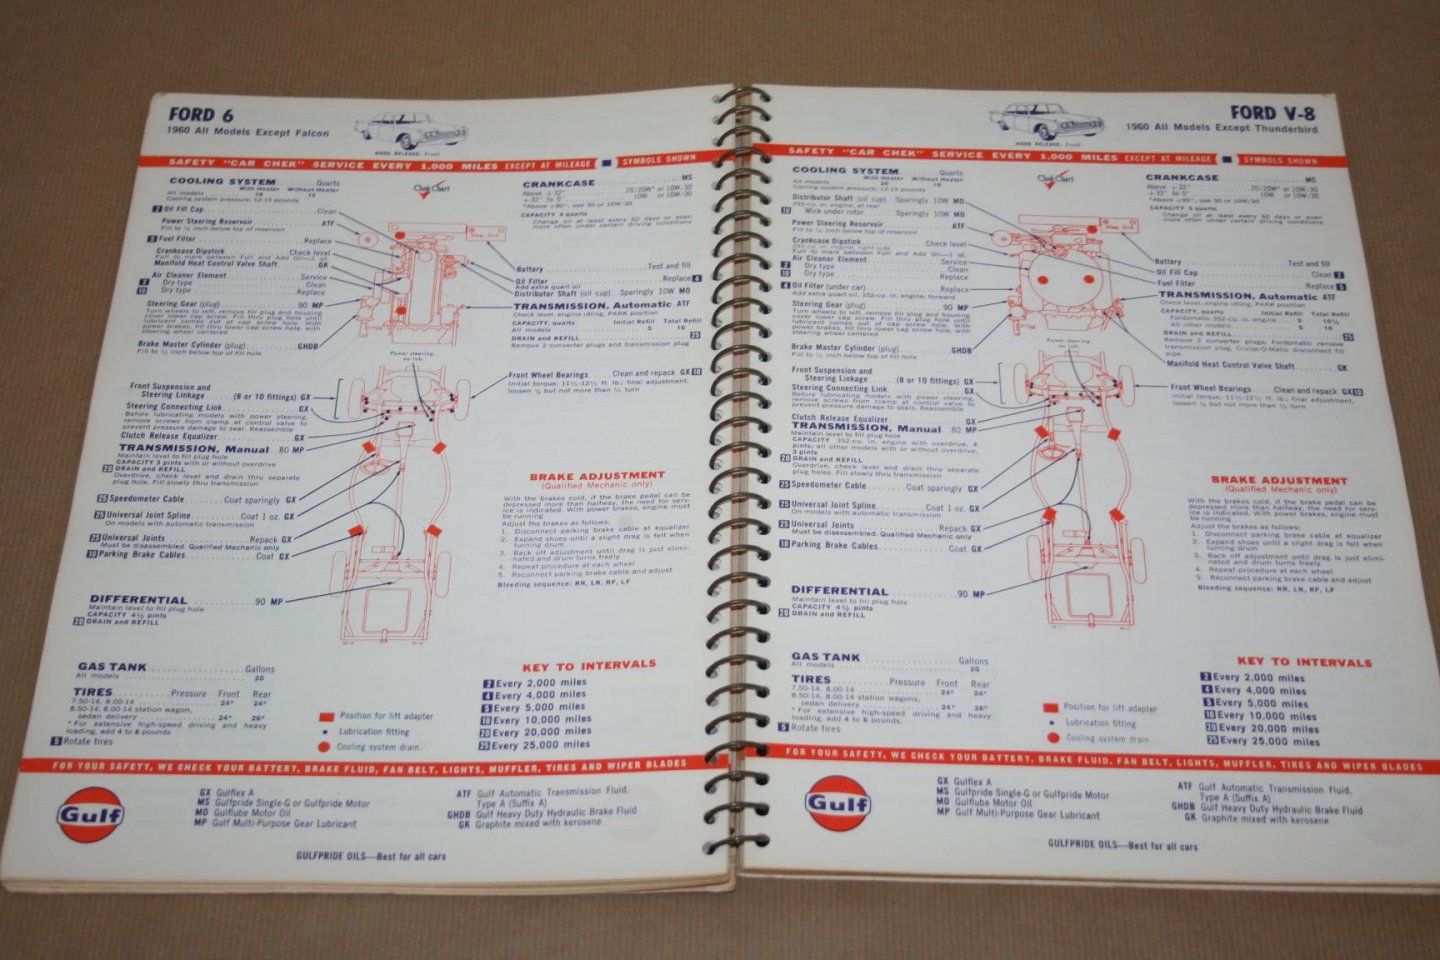  - Gulflex Lubrication Guide & Safety Car-Check Service Manual - 1964